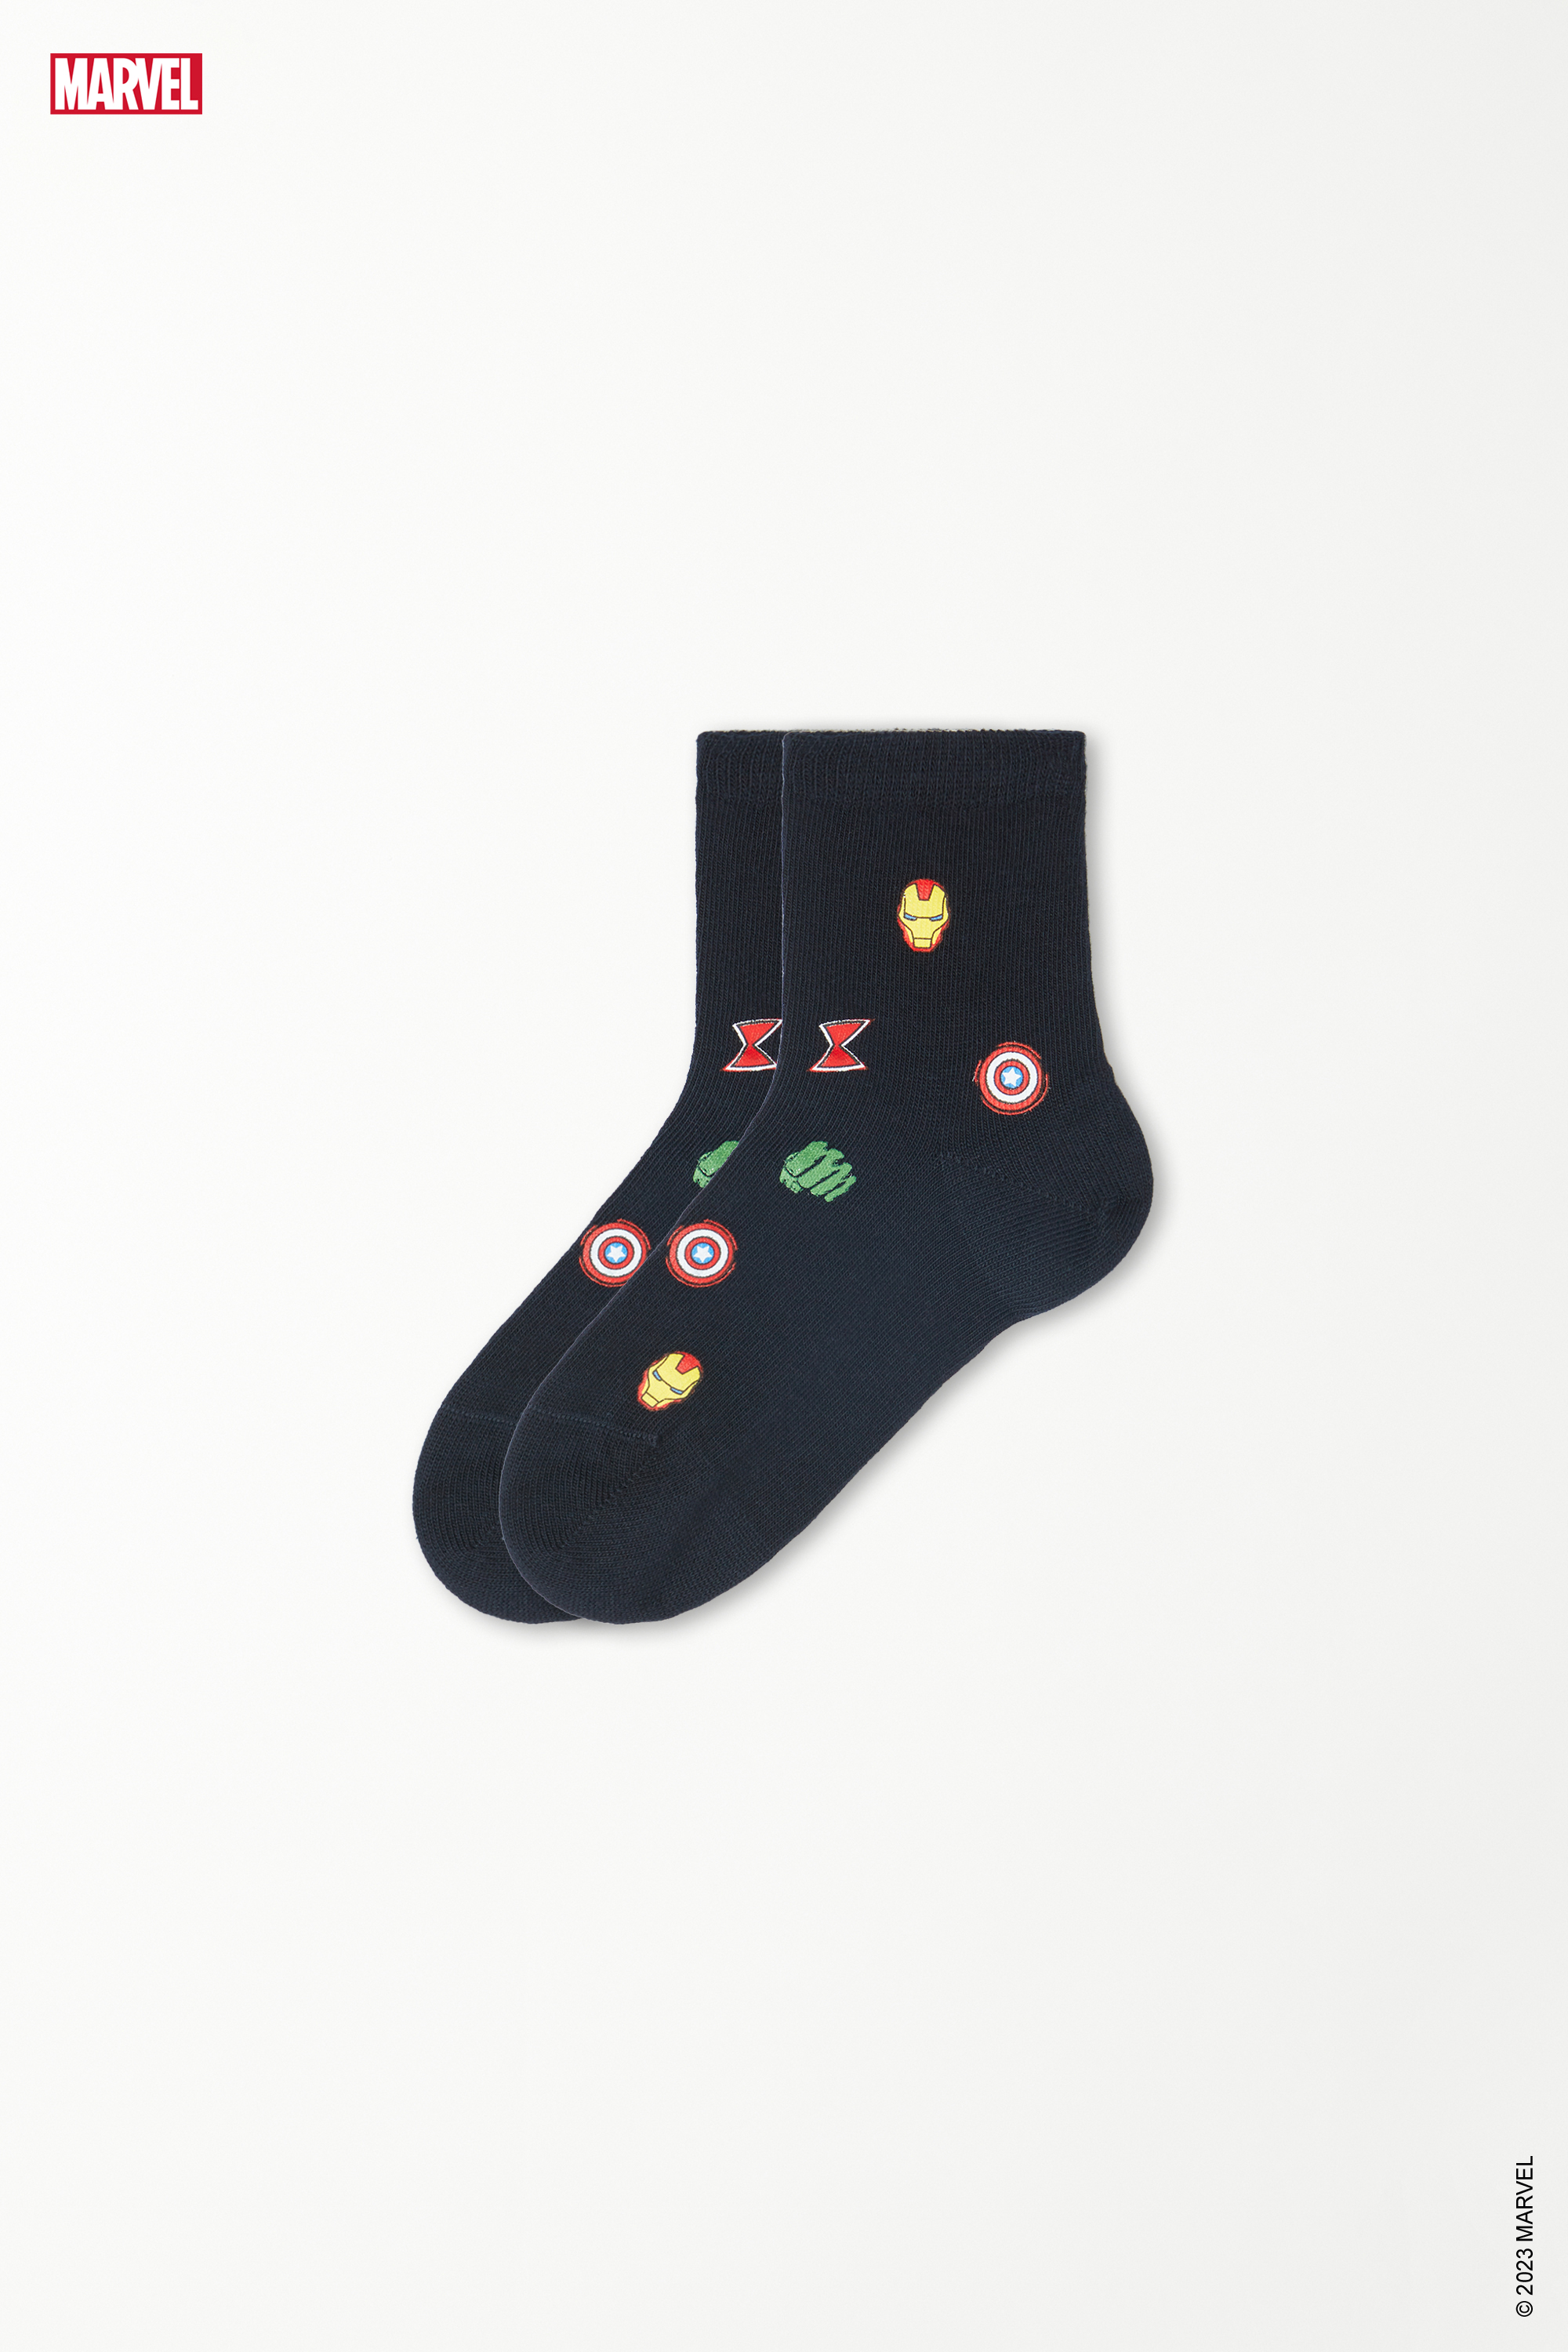 Boys’ Marvel Print Short Socks